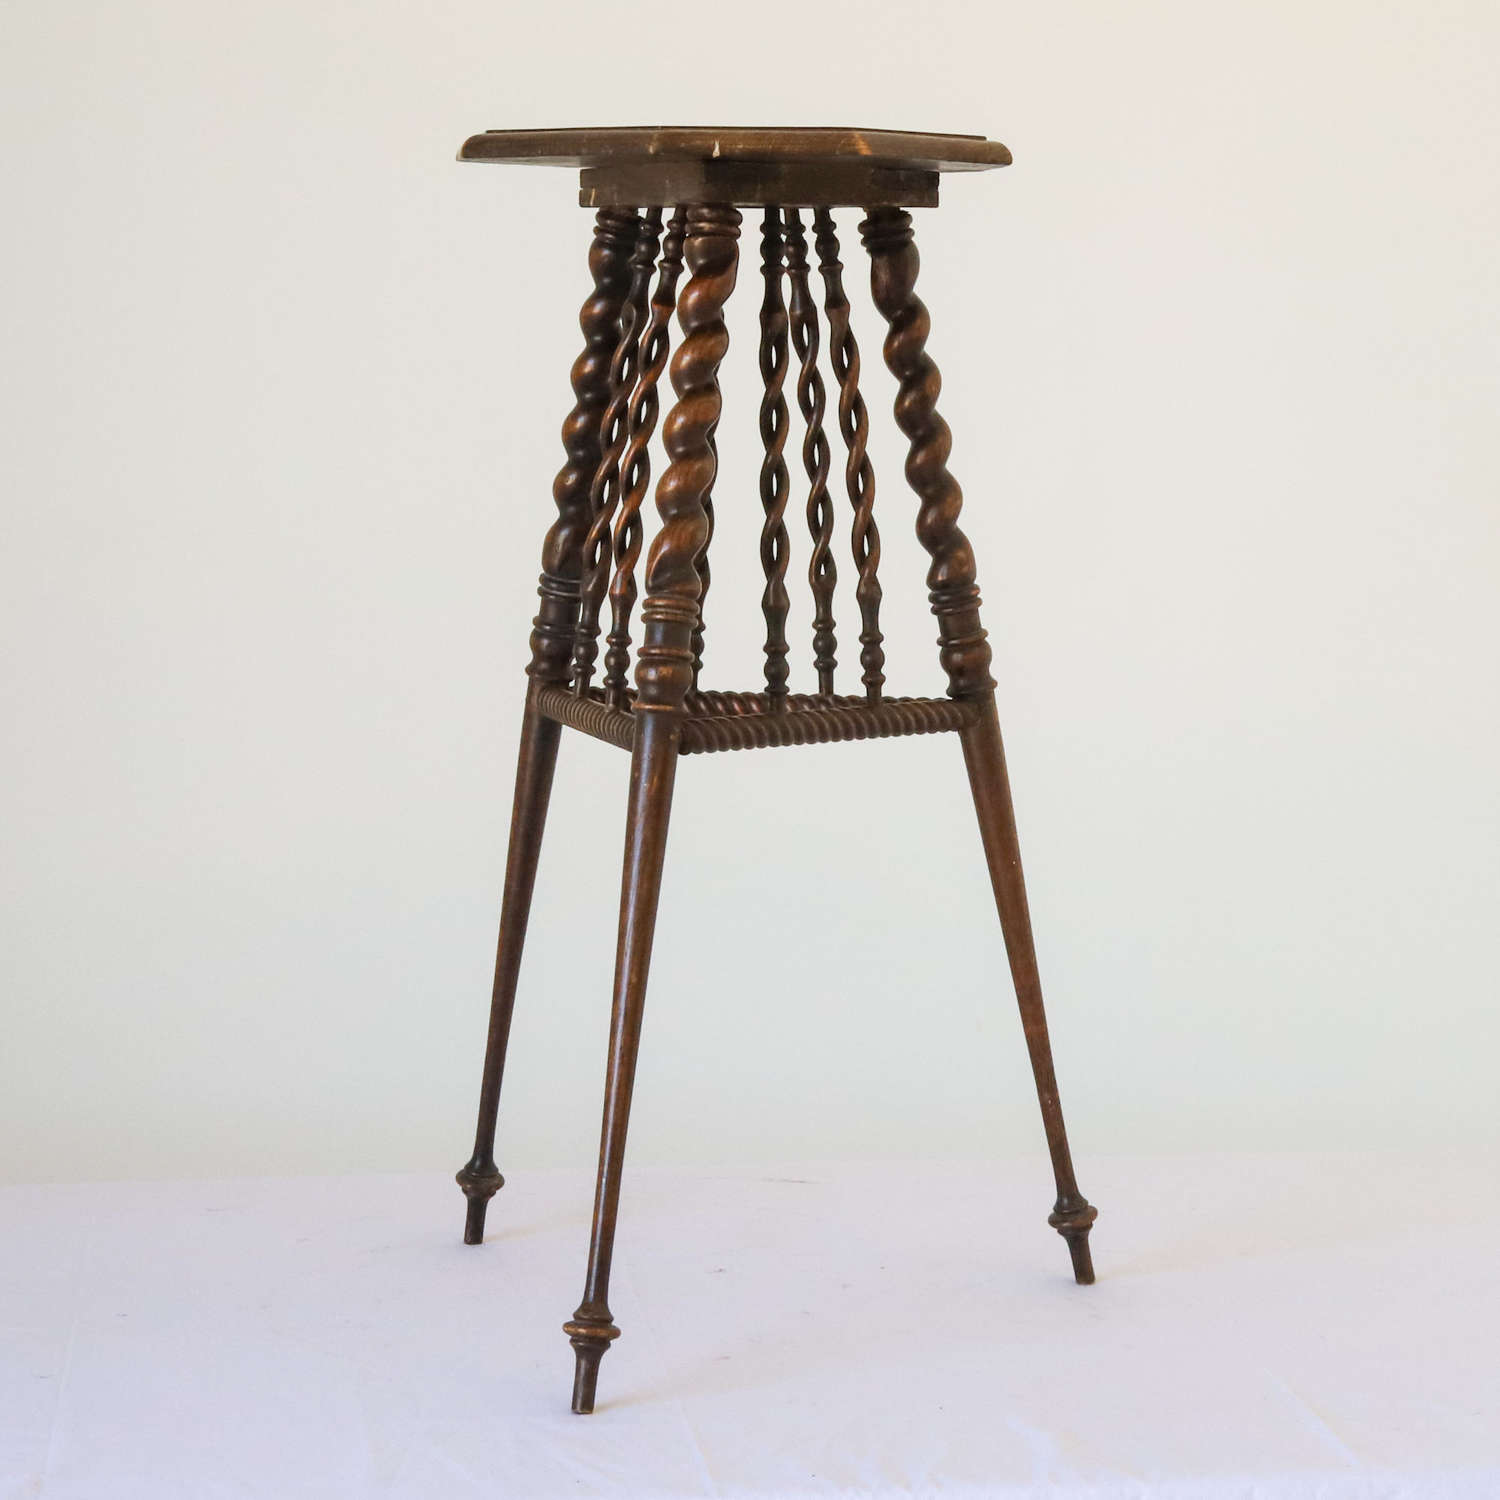 Early 20th century English oak barley twist tripod table/stand